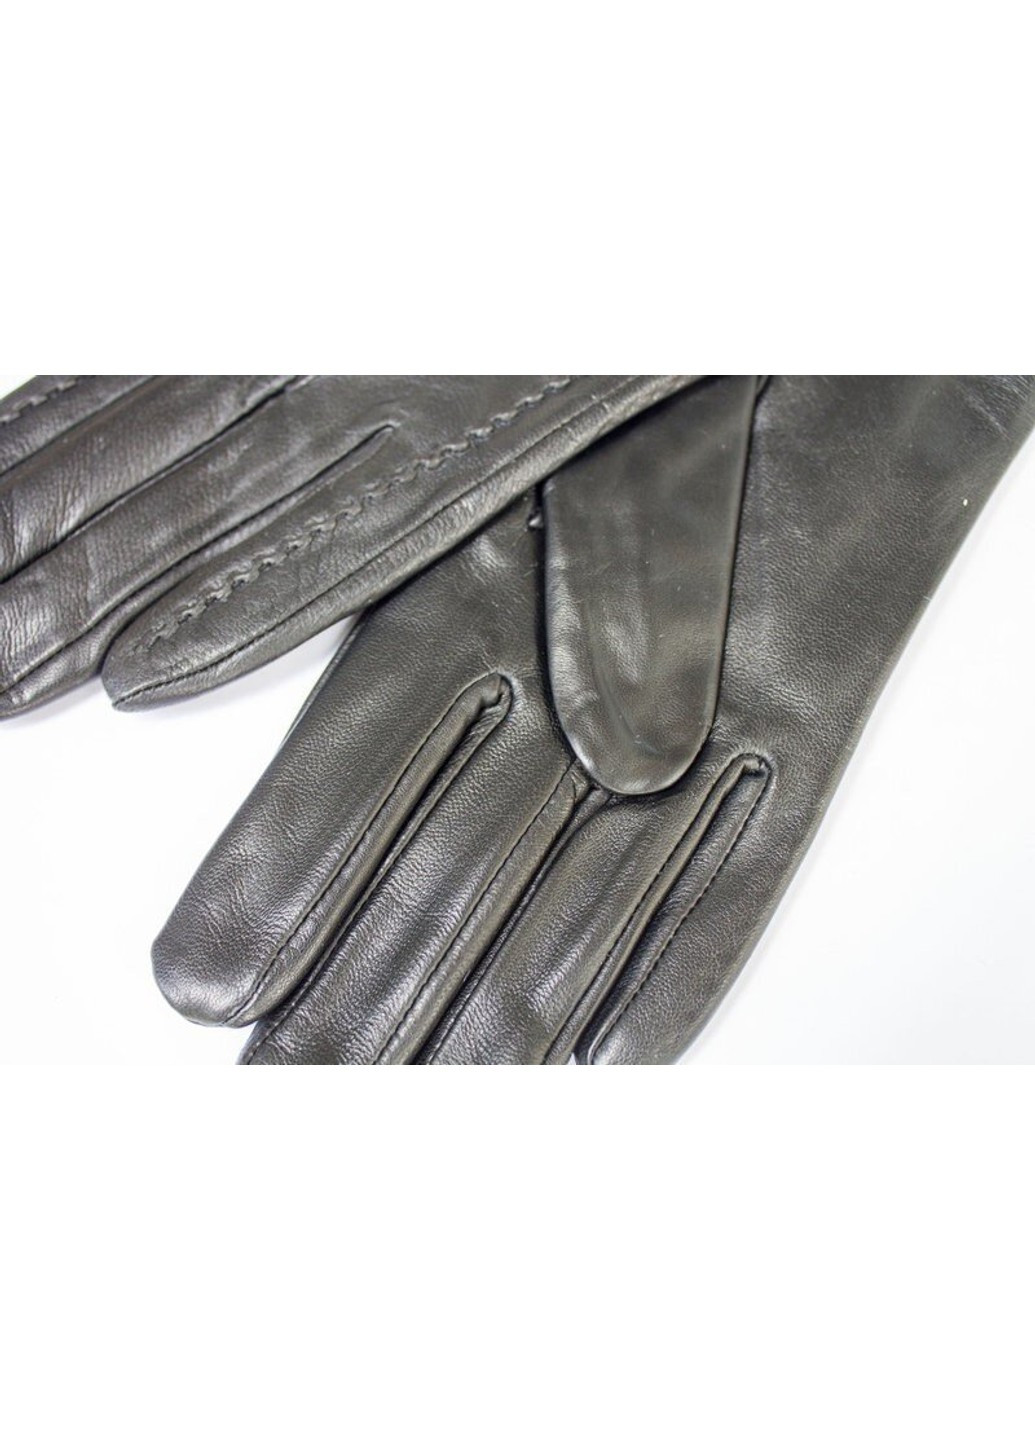 Женские перчатки 401 L Shust Gloves (266143786)